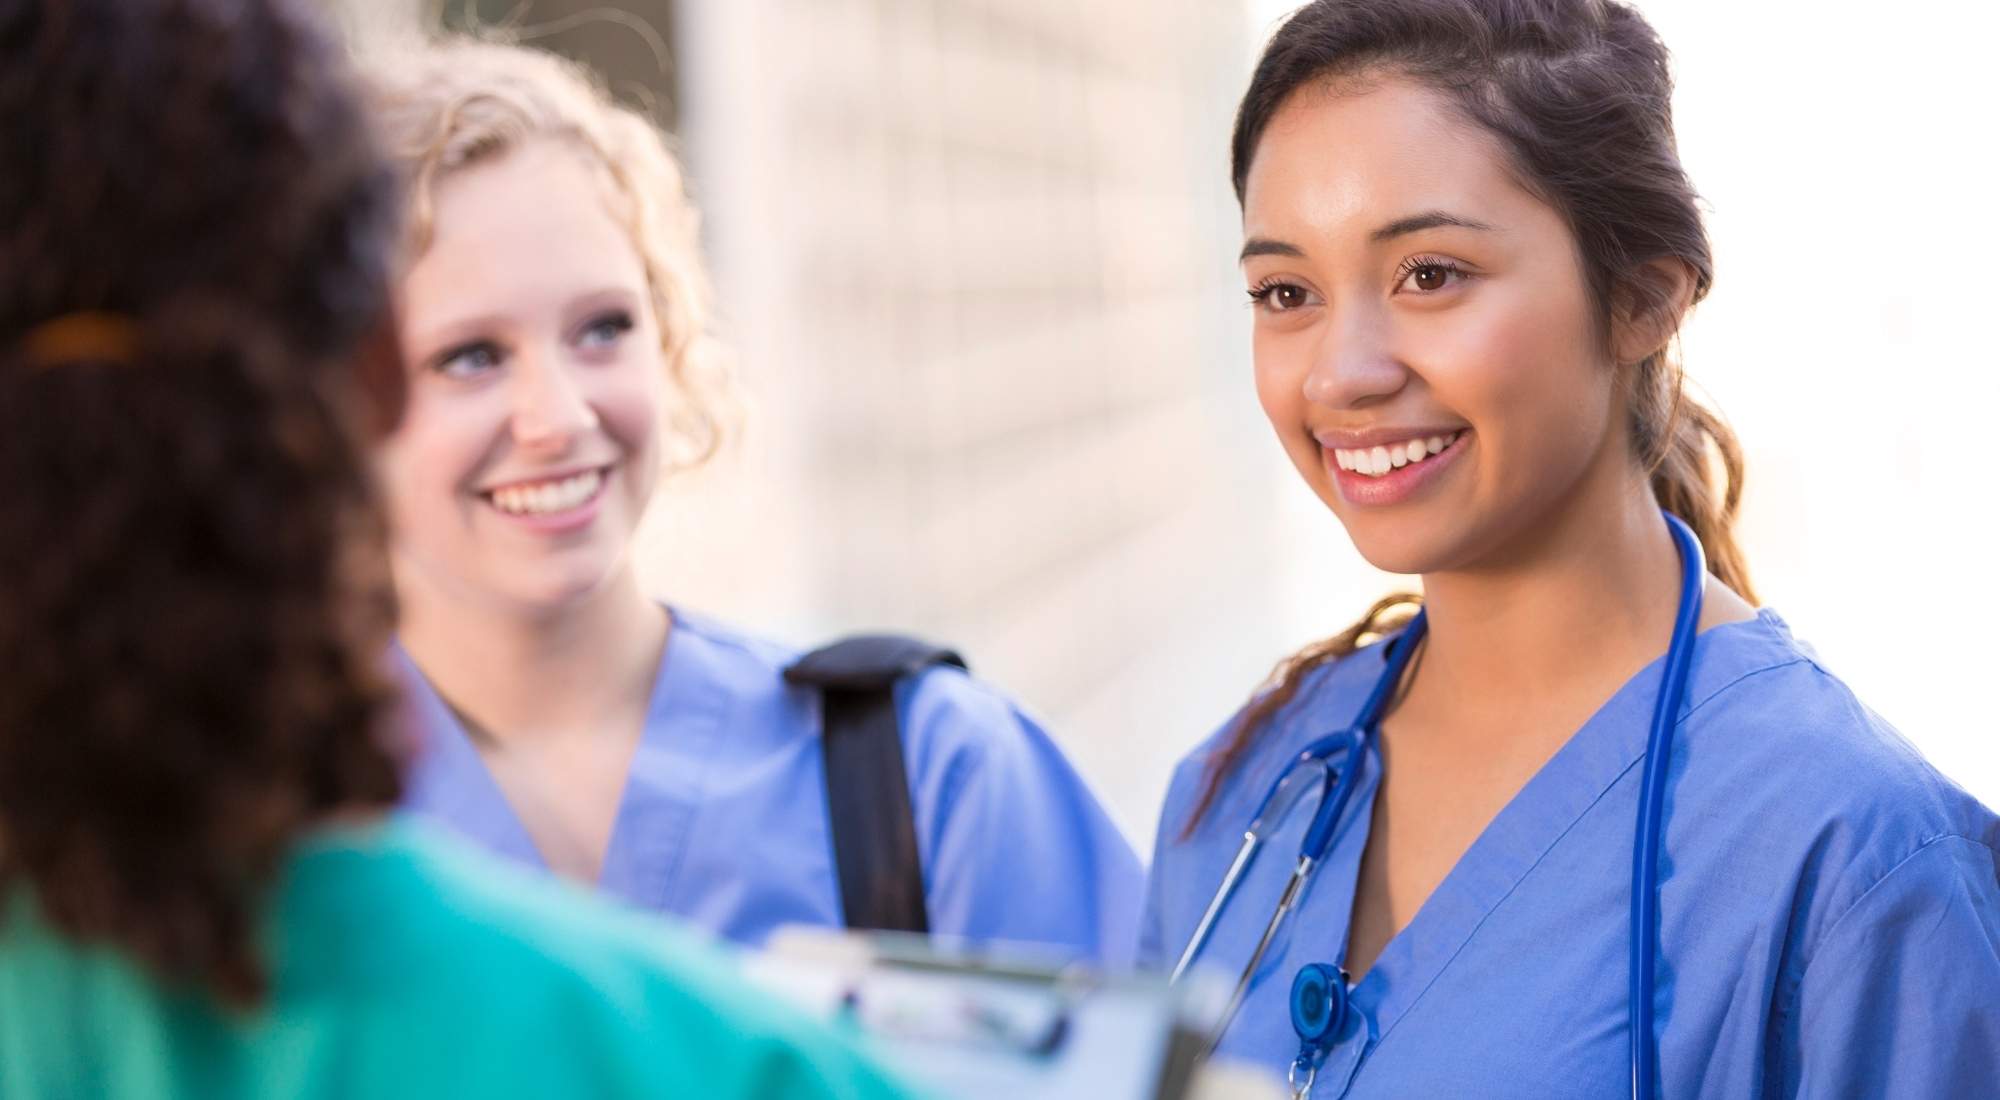 apply for nursing jobs abroad